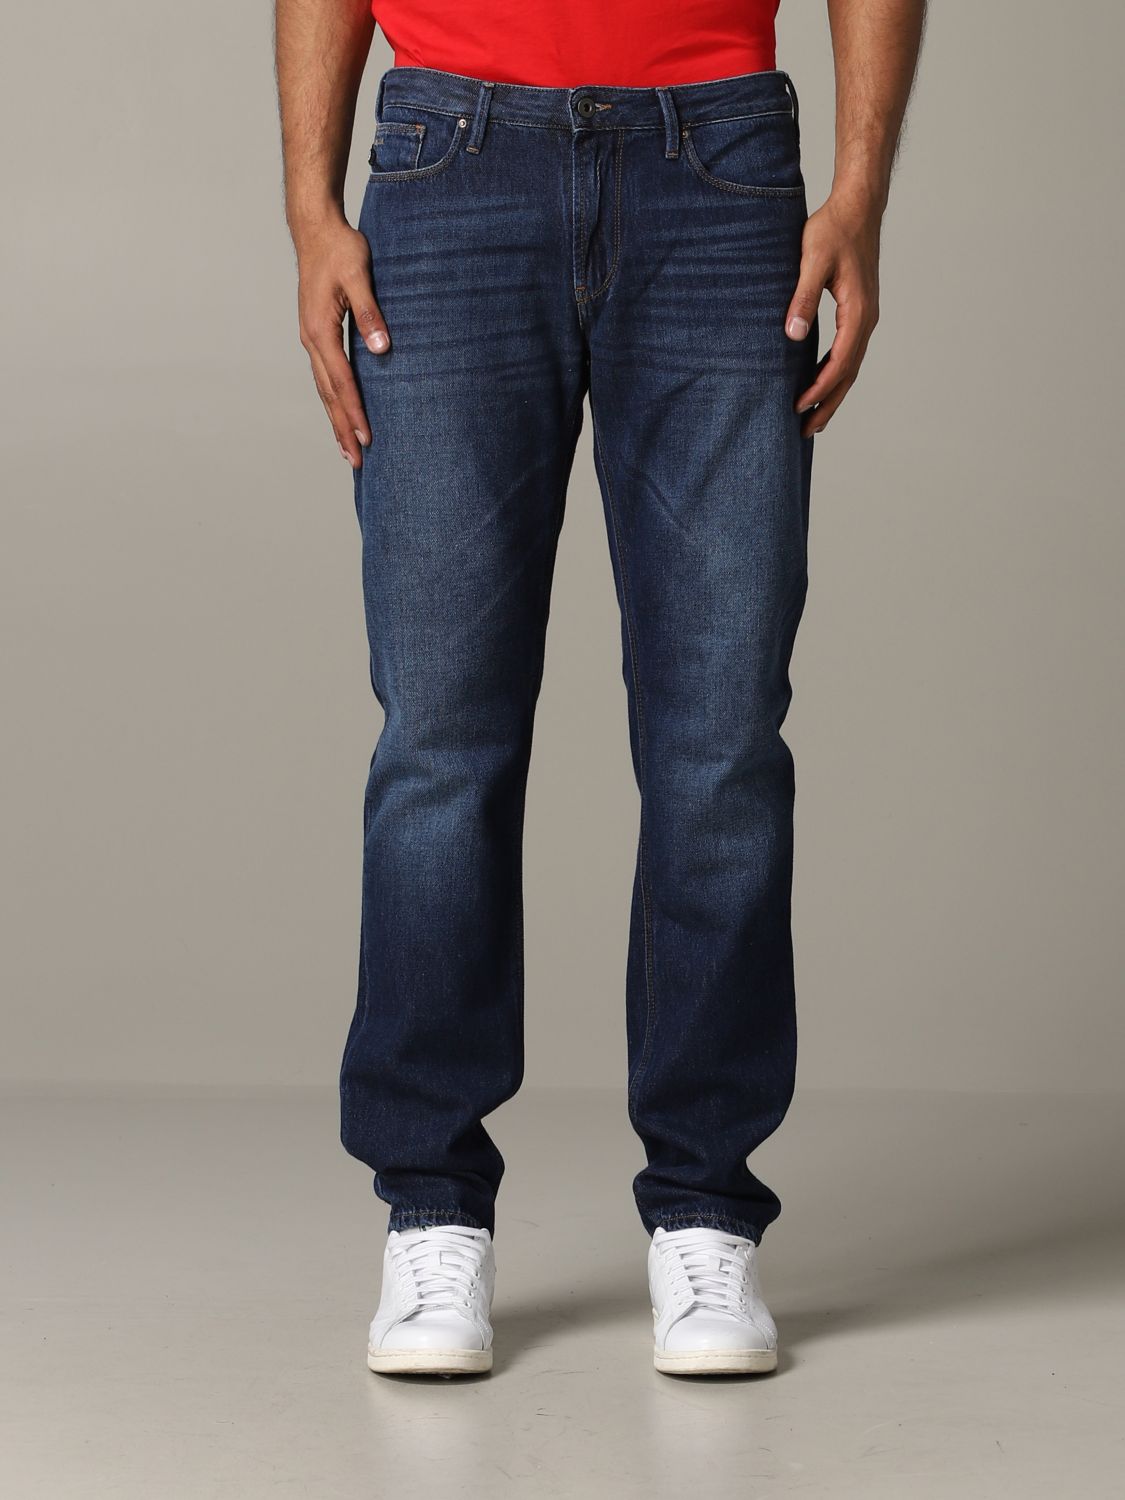 emporio armani skinny jeans mens